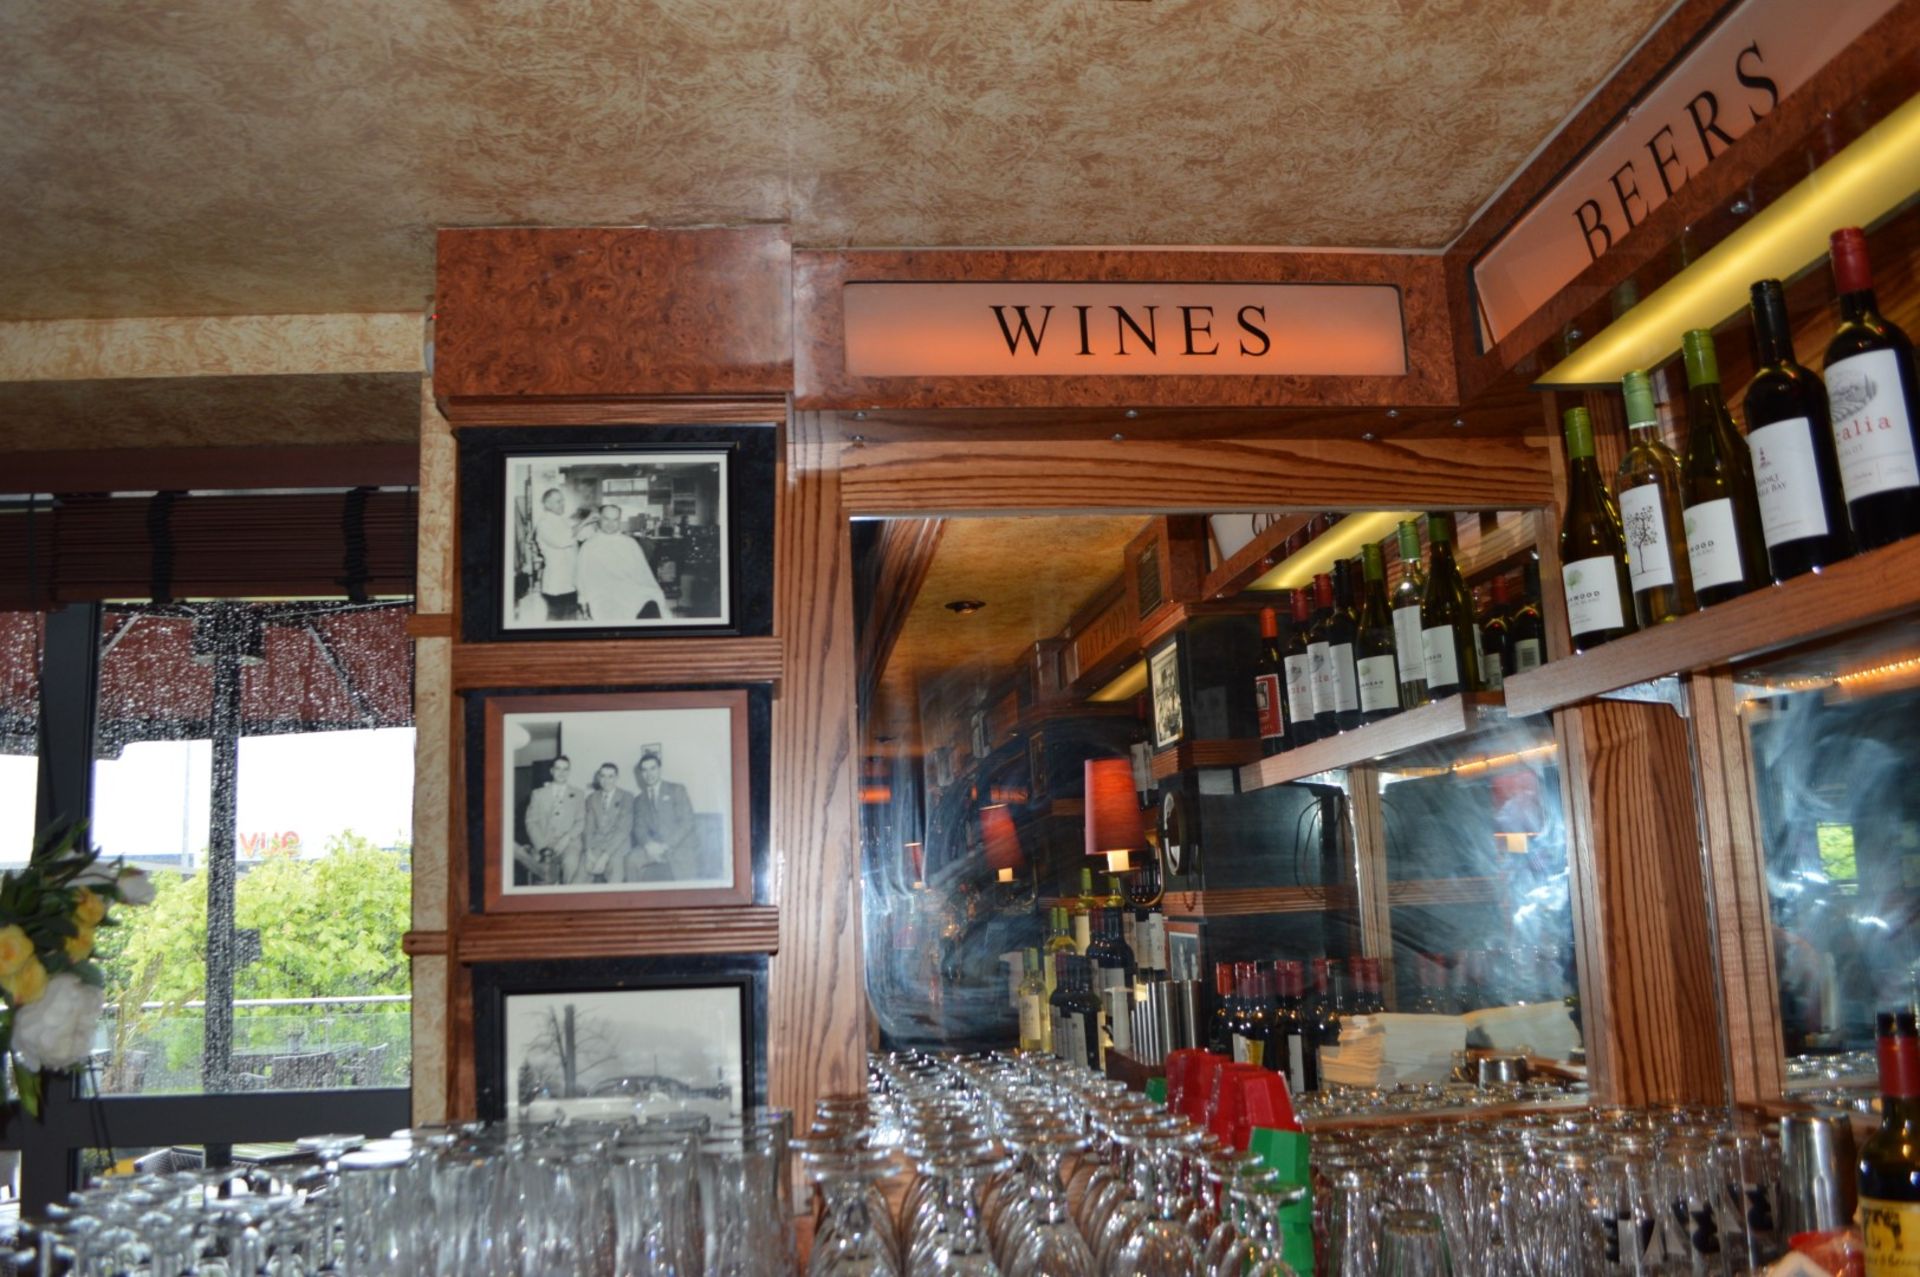 1 x Restaurant / Pub Bar and Backbar From American Diner Themed Restaurant - Burr Walnut and Black - Image 36 of 47